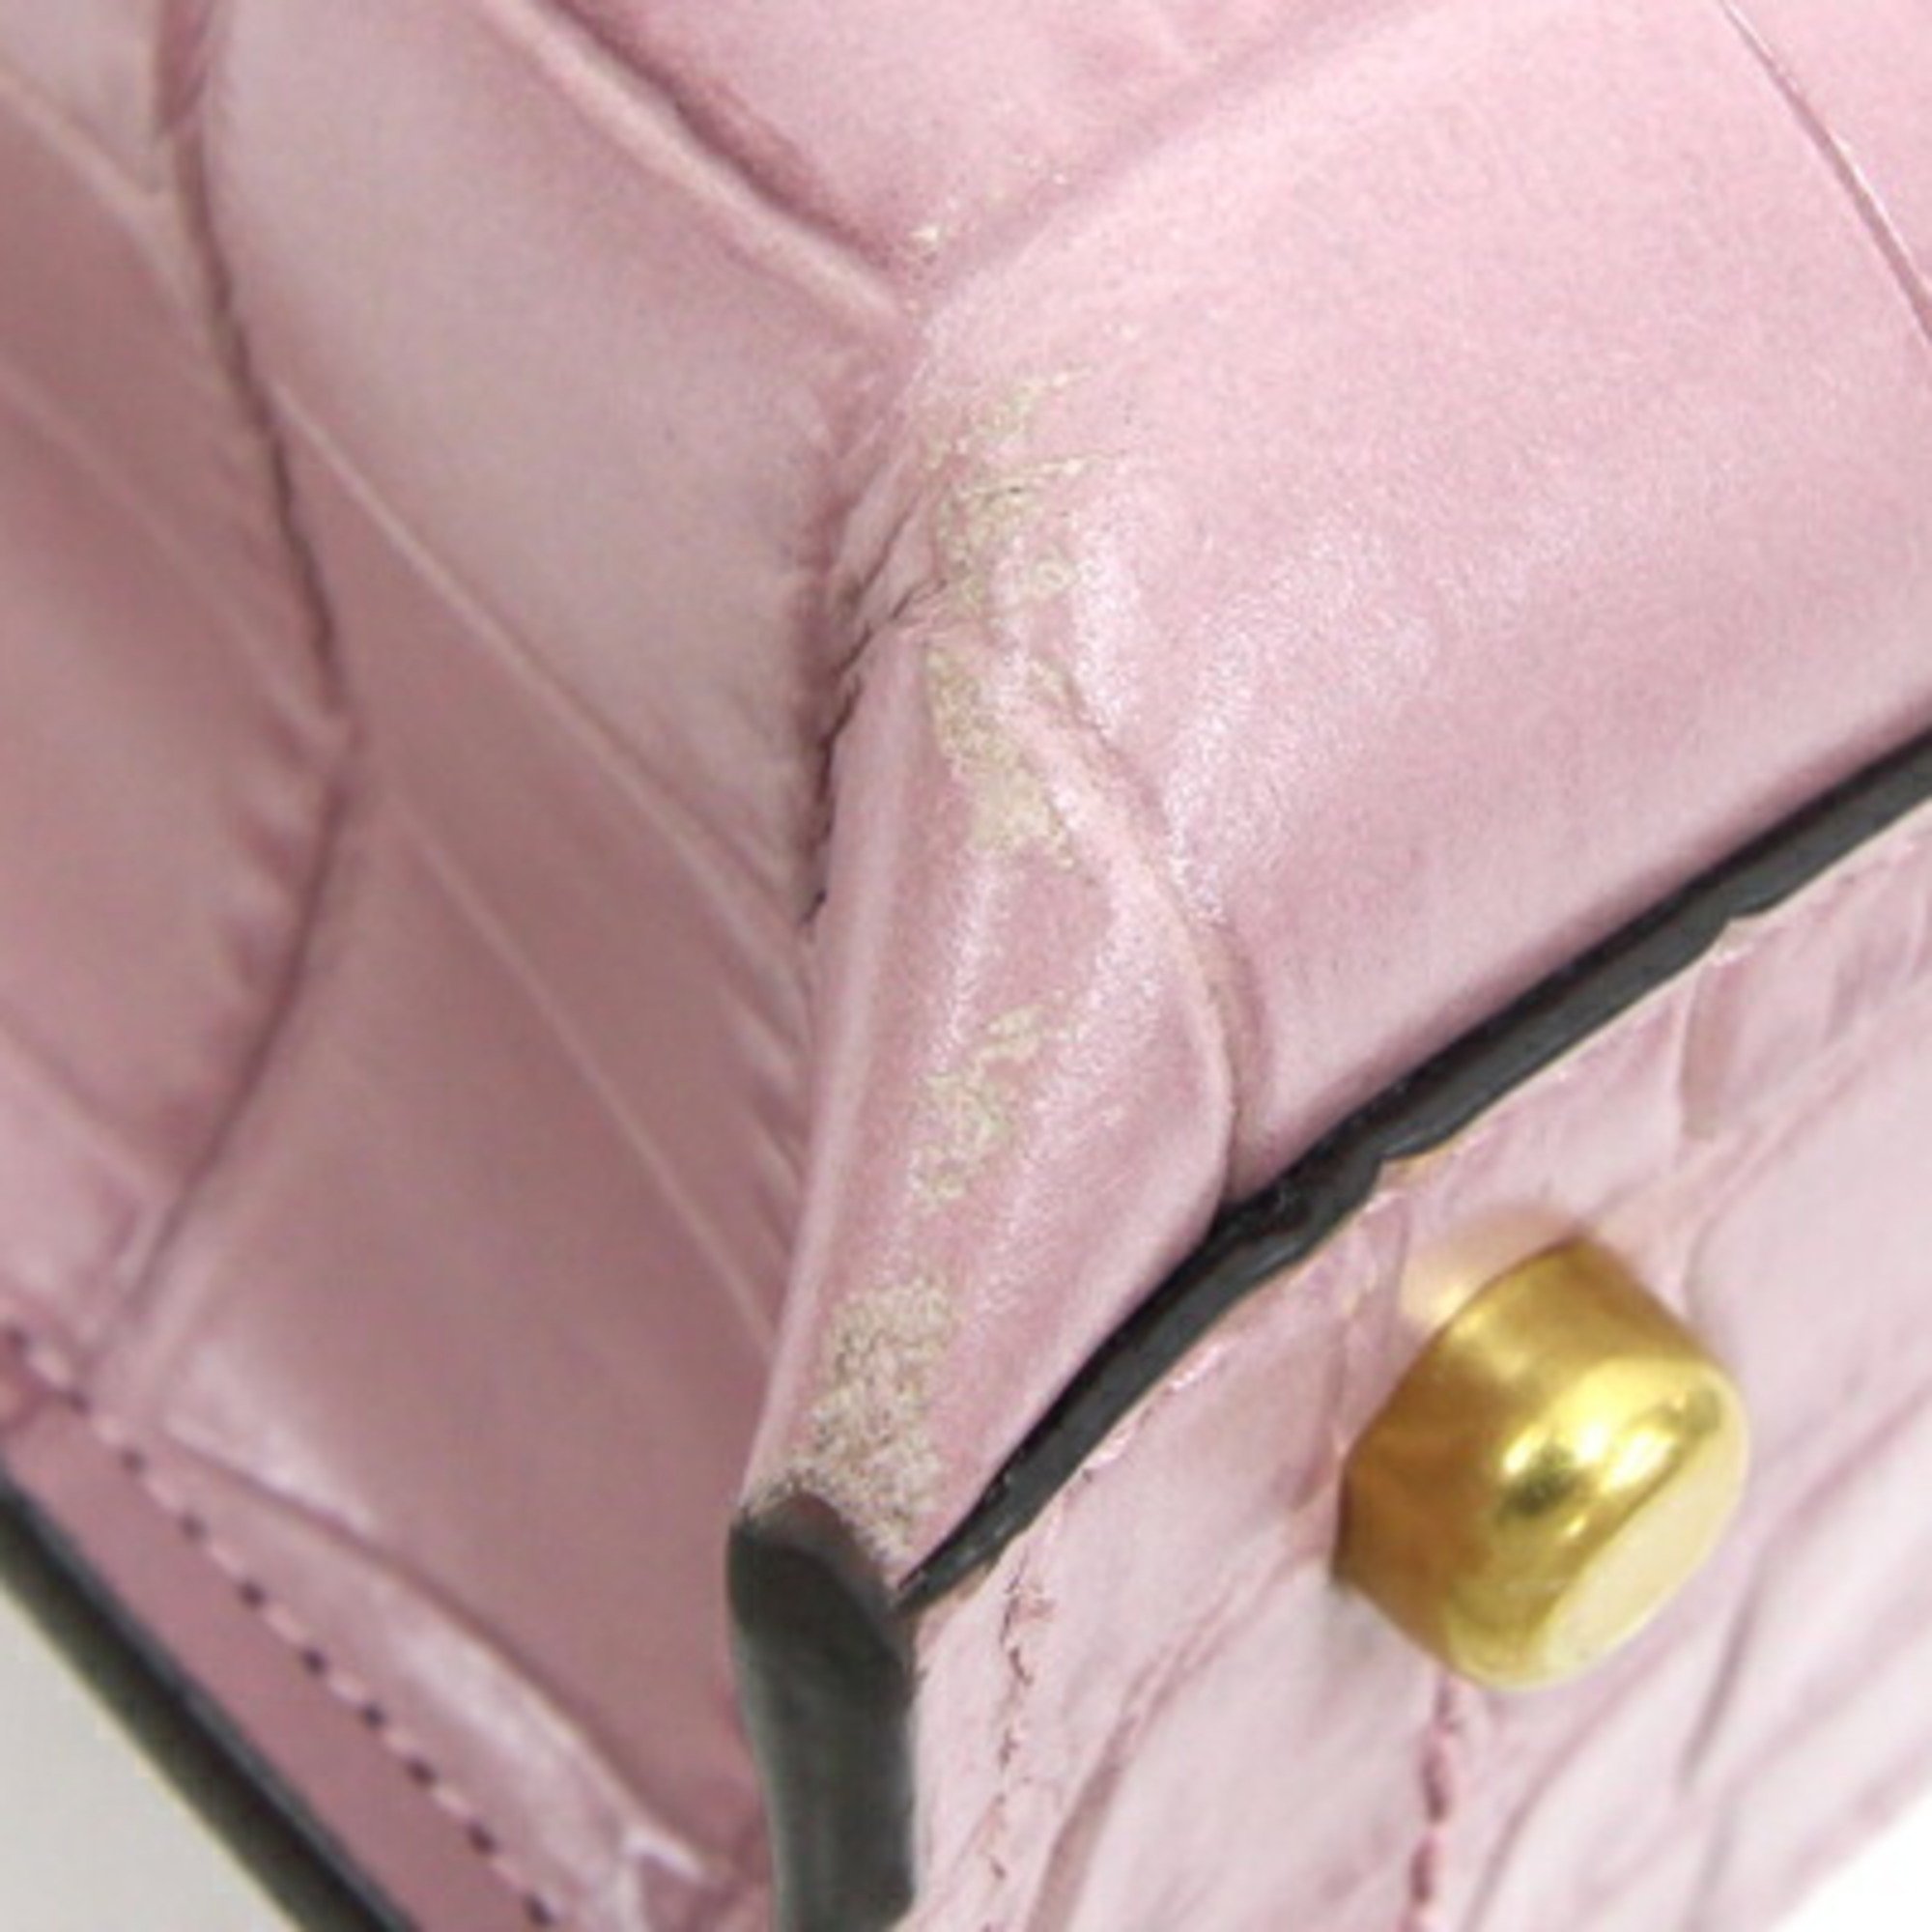 Coach handbag Willow Tote 24 C8632 pink leather ladies COACH